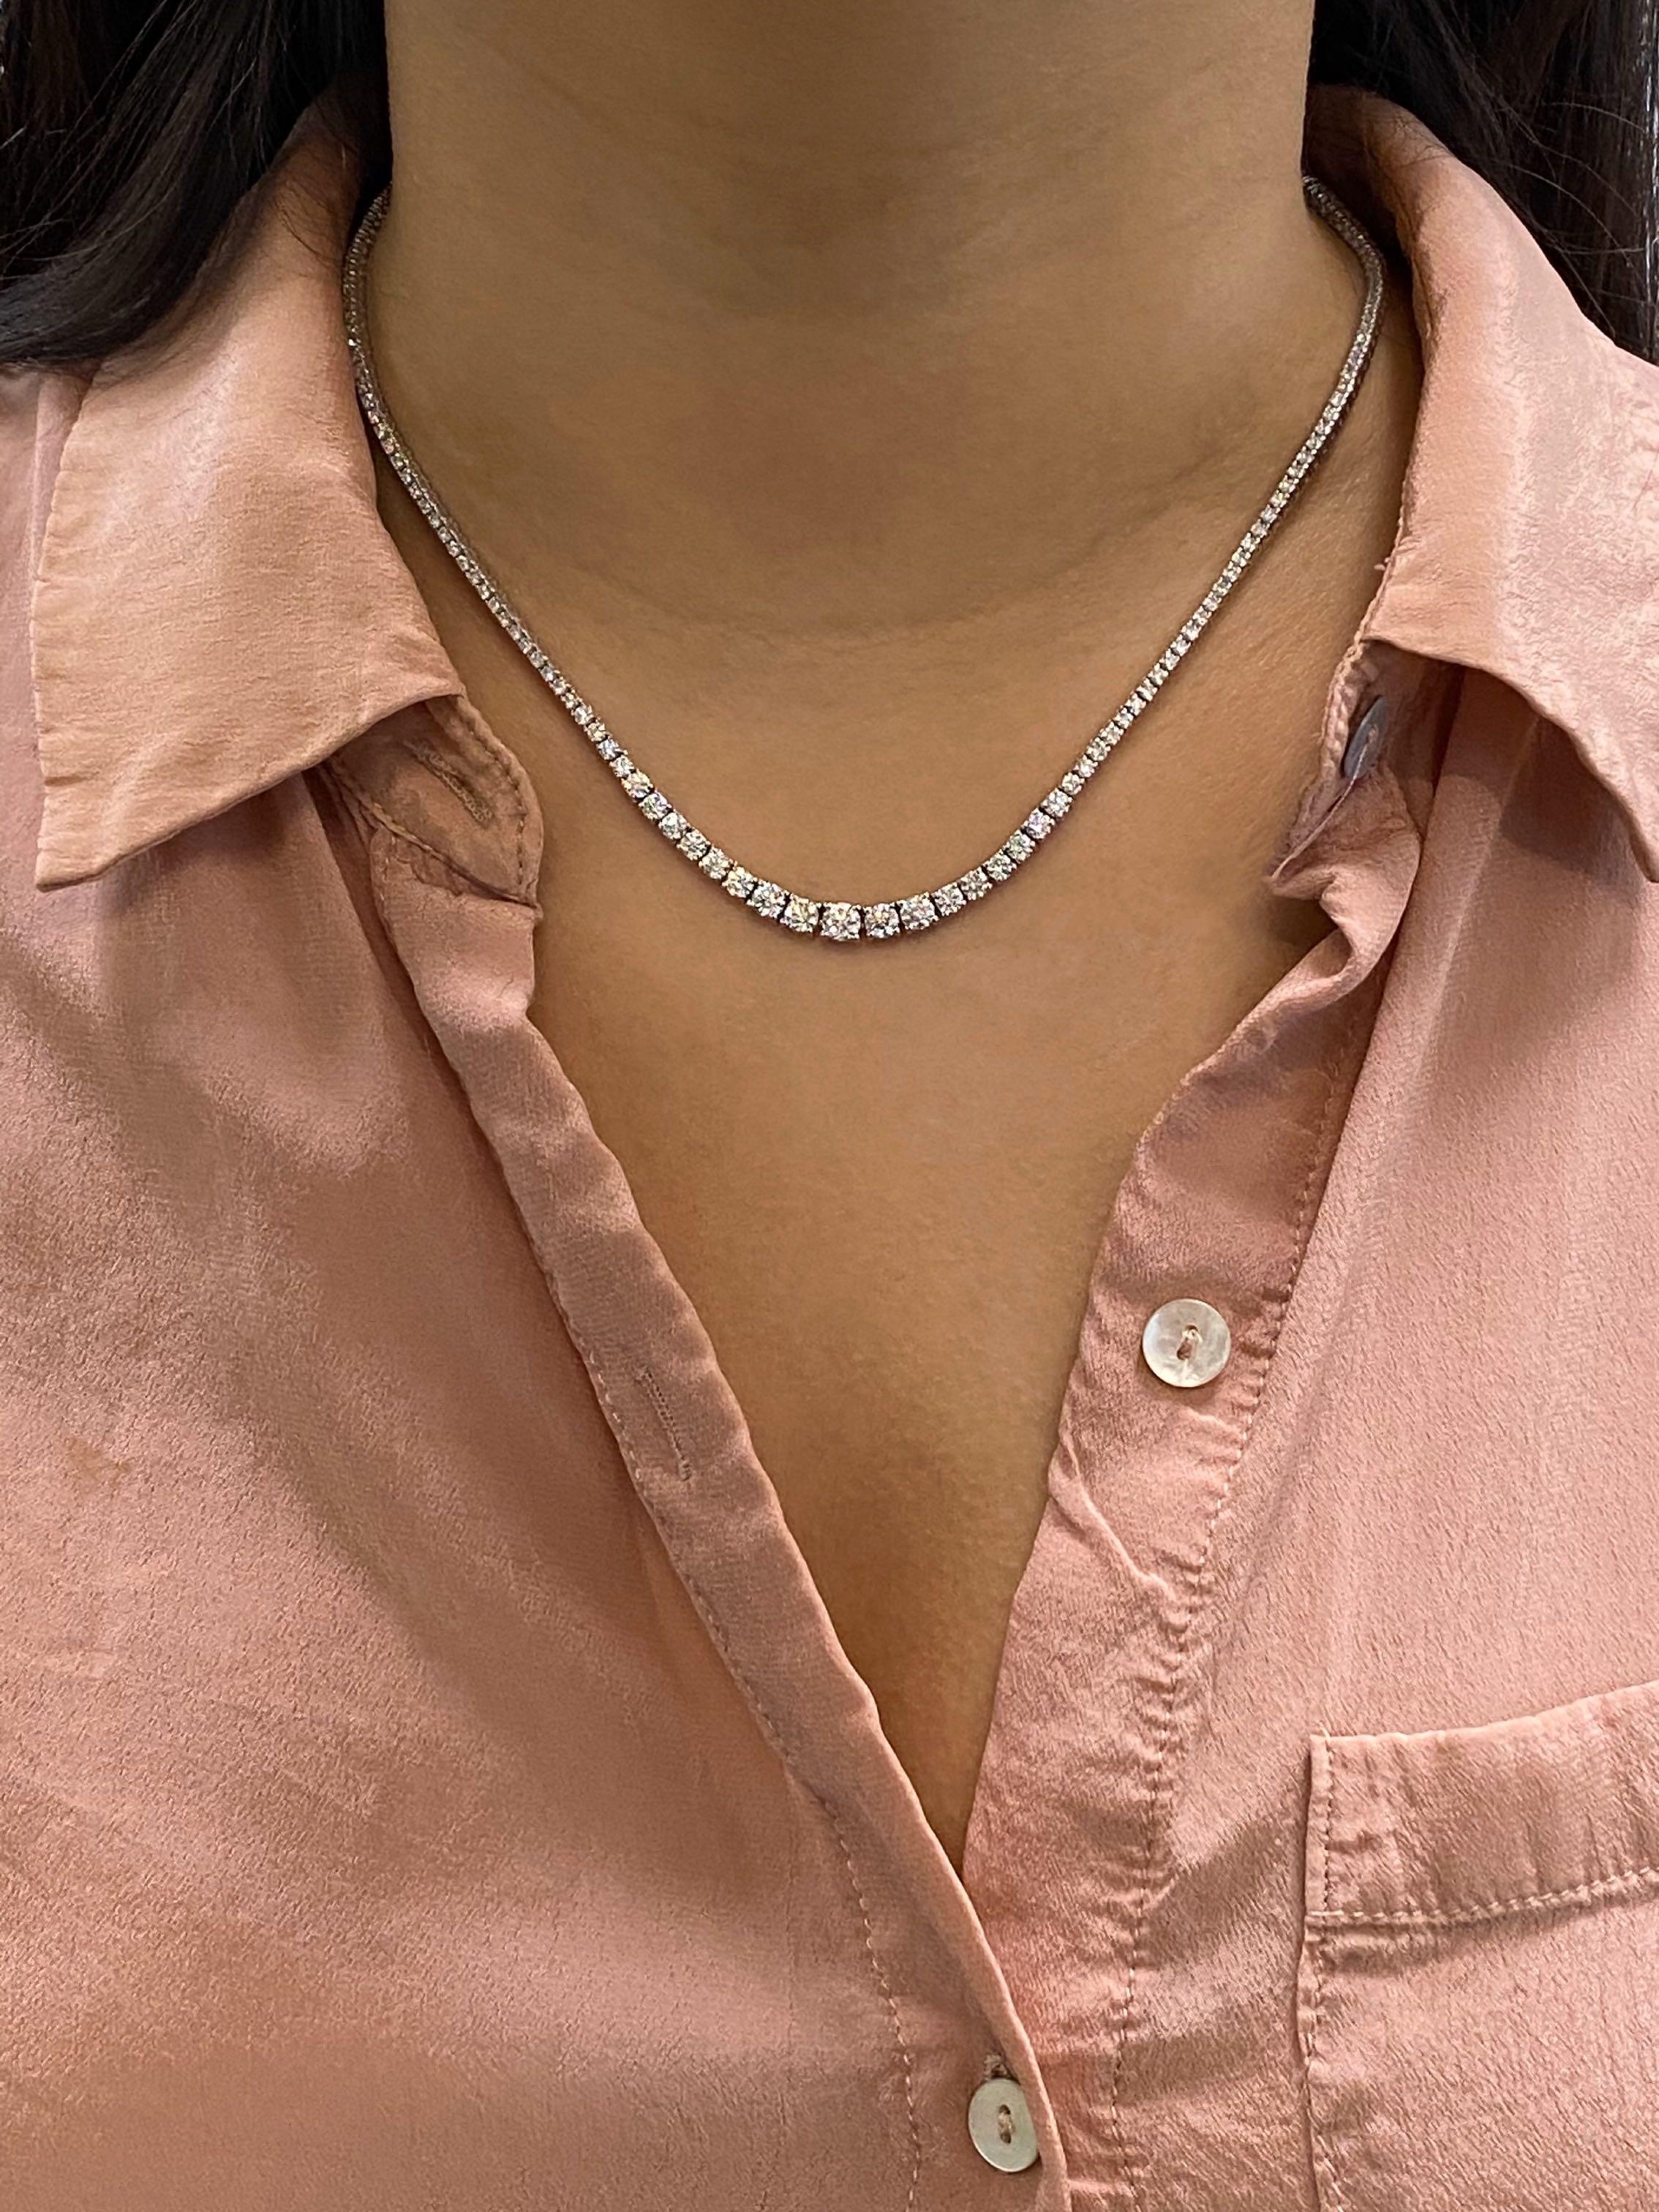 Rachel Koen 14 Karat White Gold Diamond Rivera Necklace 7.57 Carat For Sale 1